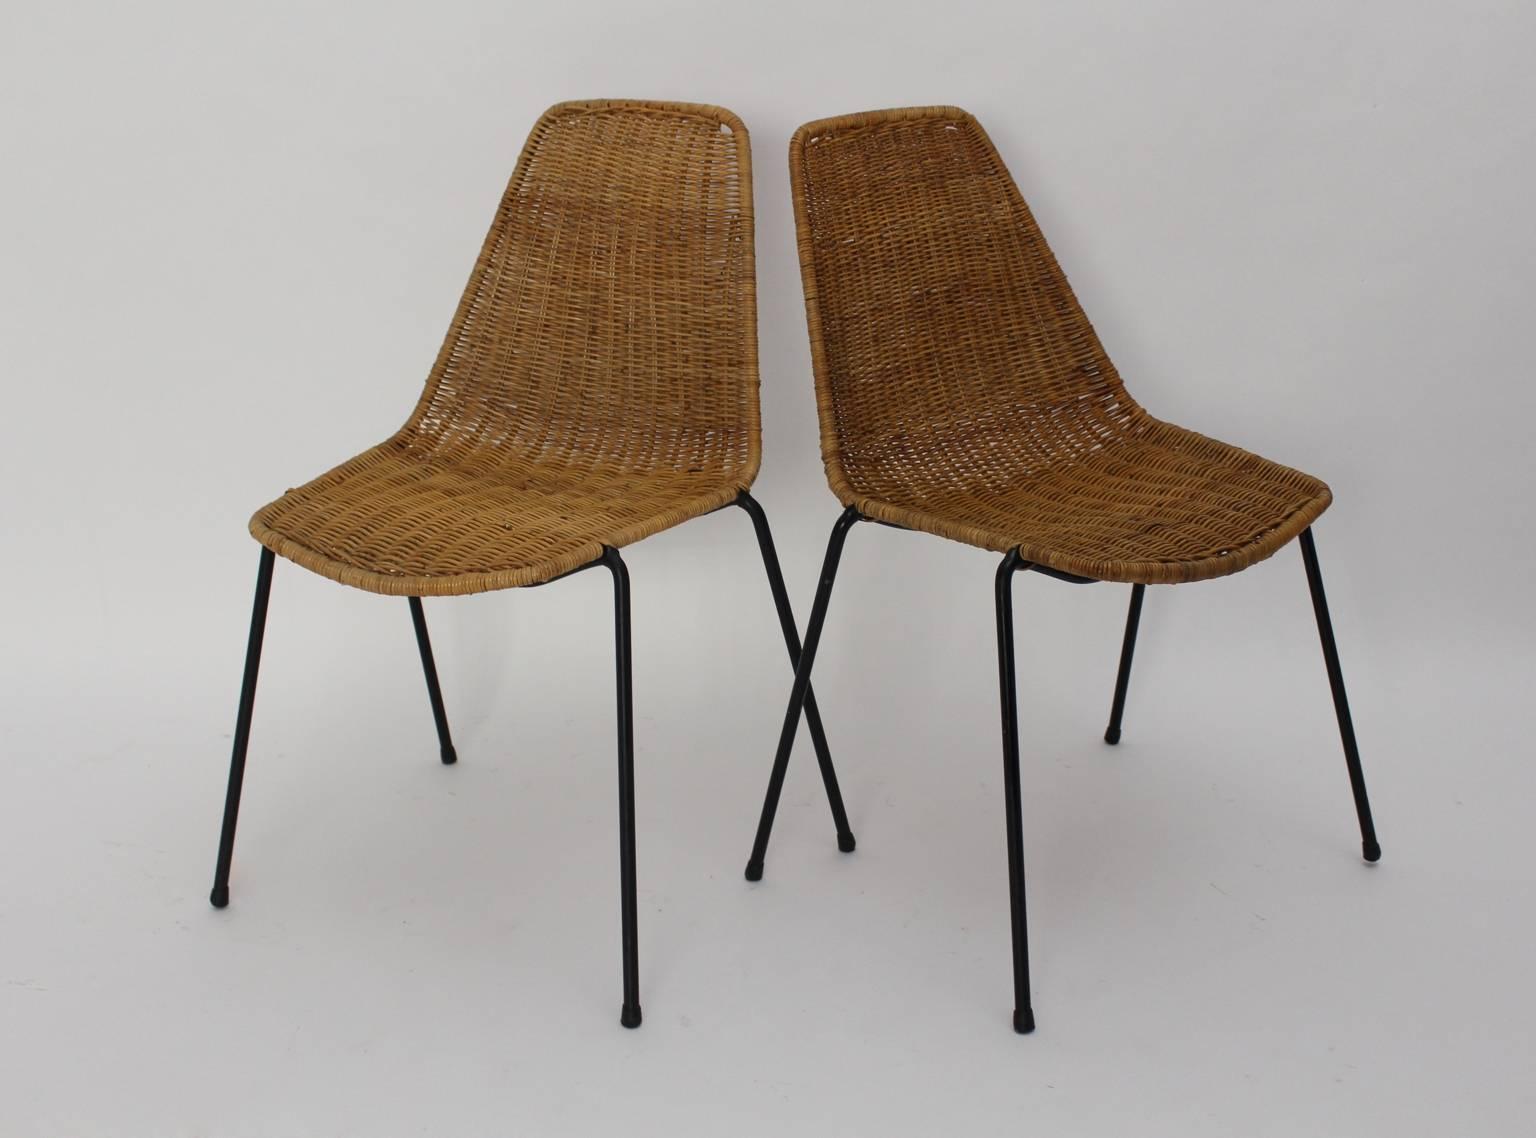 Mid Century Modern set of two chairs from rattan designed by the Swiss designer Gian Franco Legler 1951 for the Italian Restaurant 